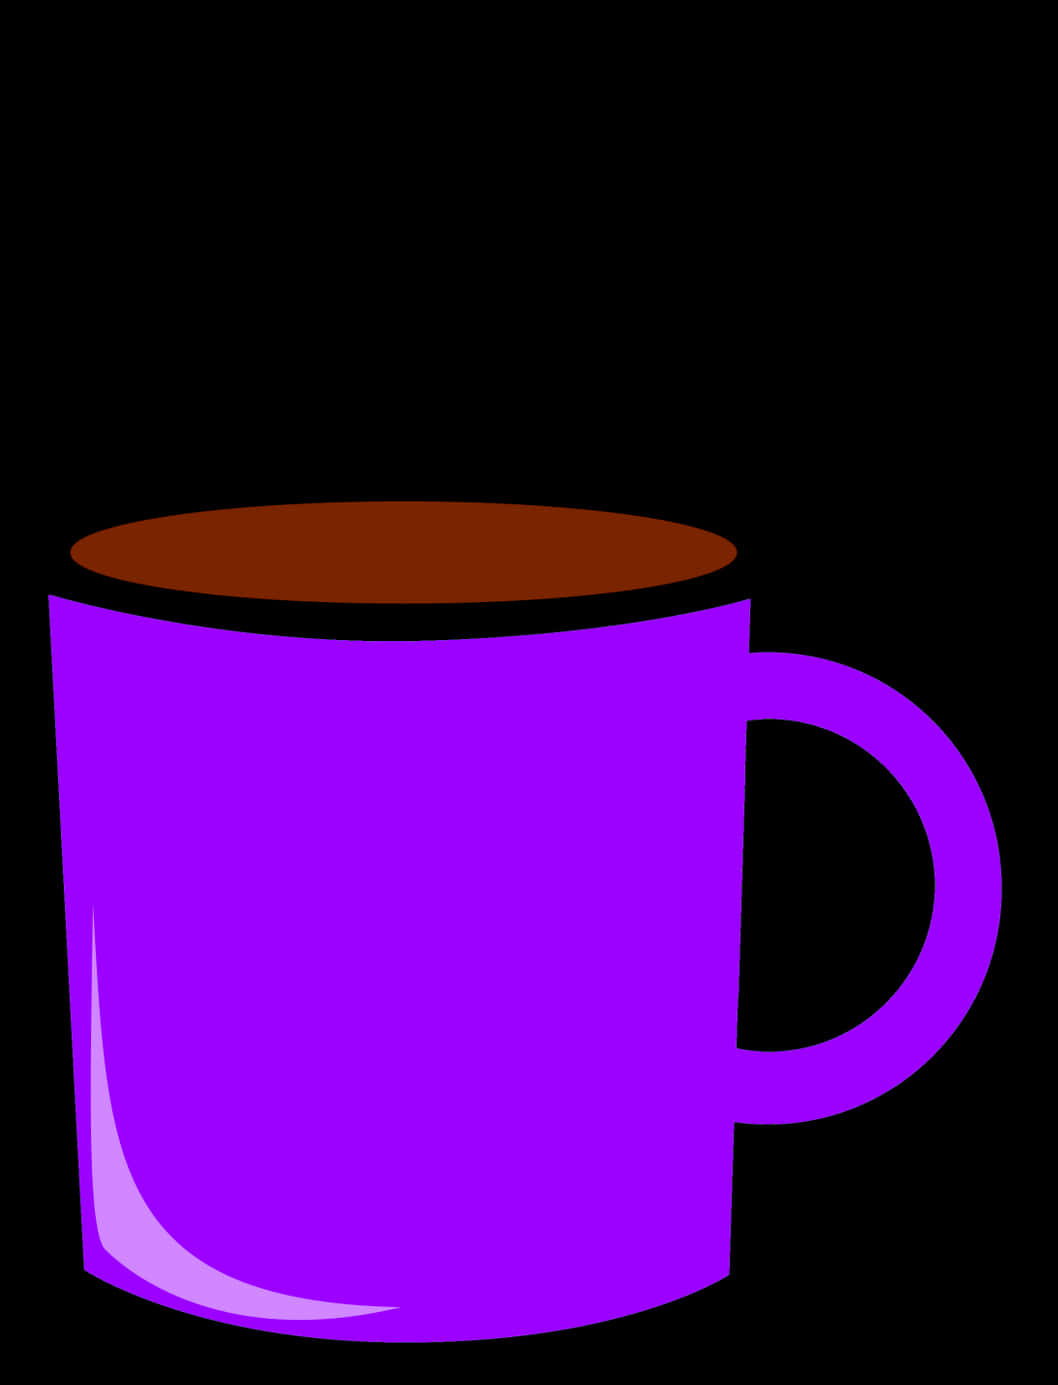 A Purple Mug With A Brown Handle